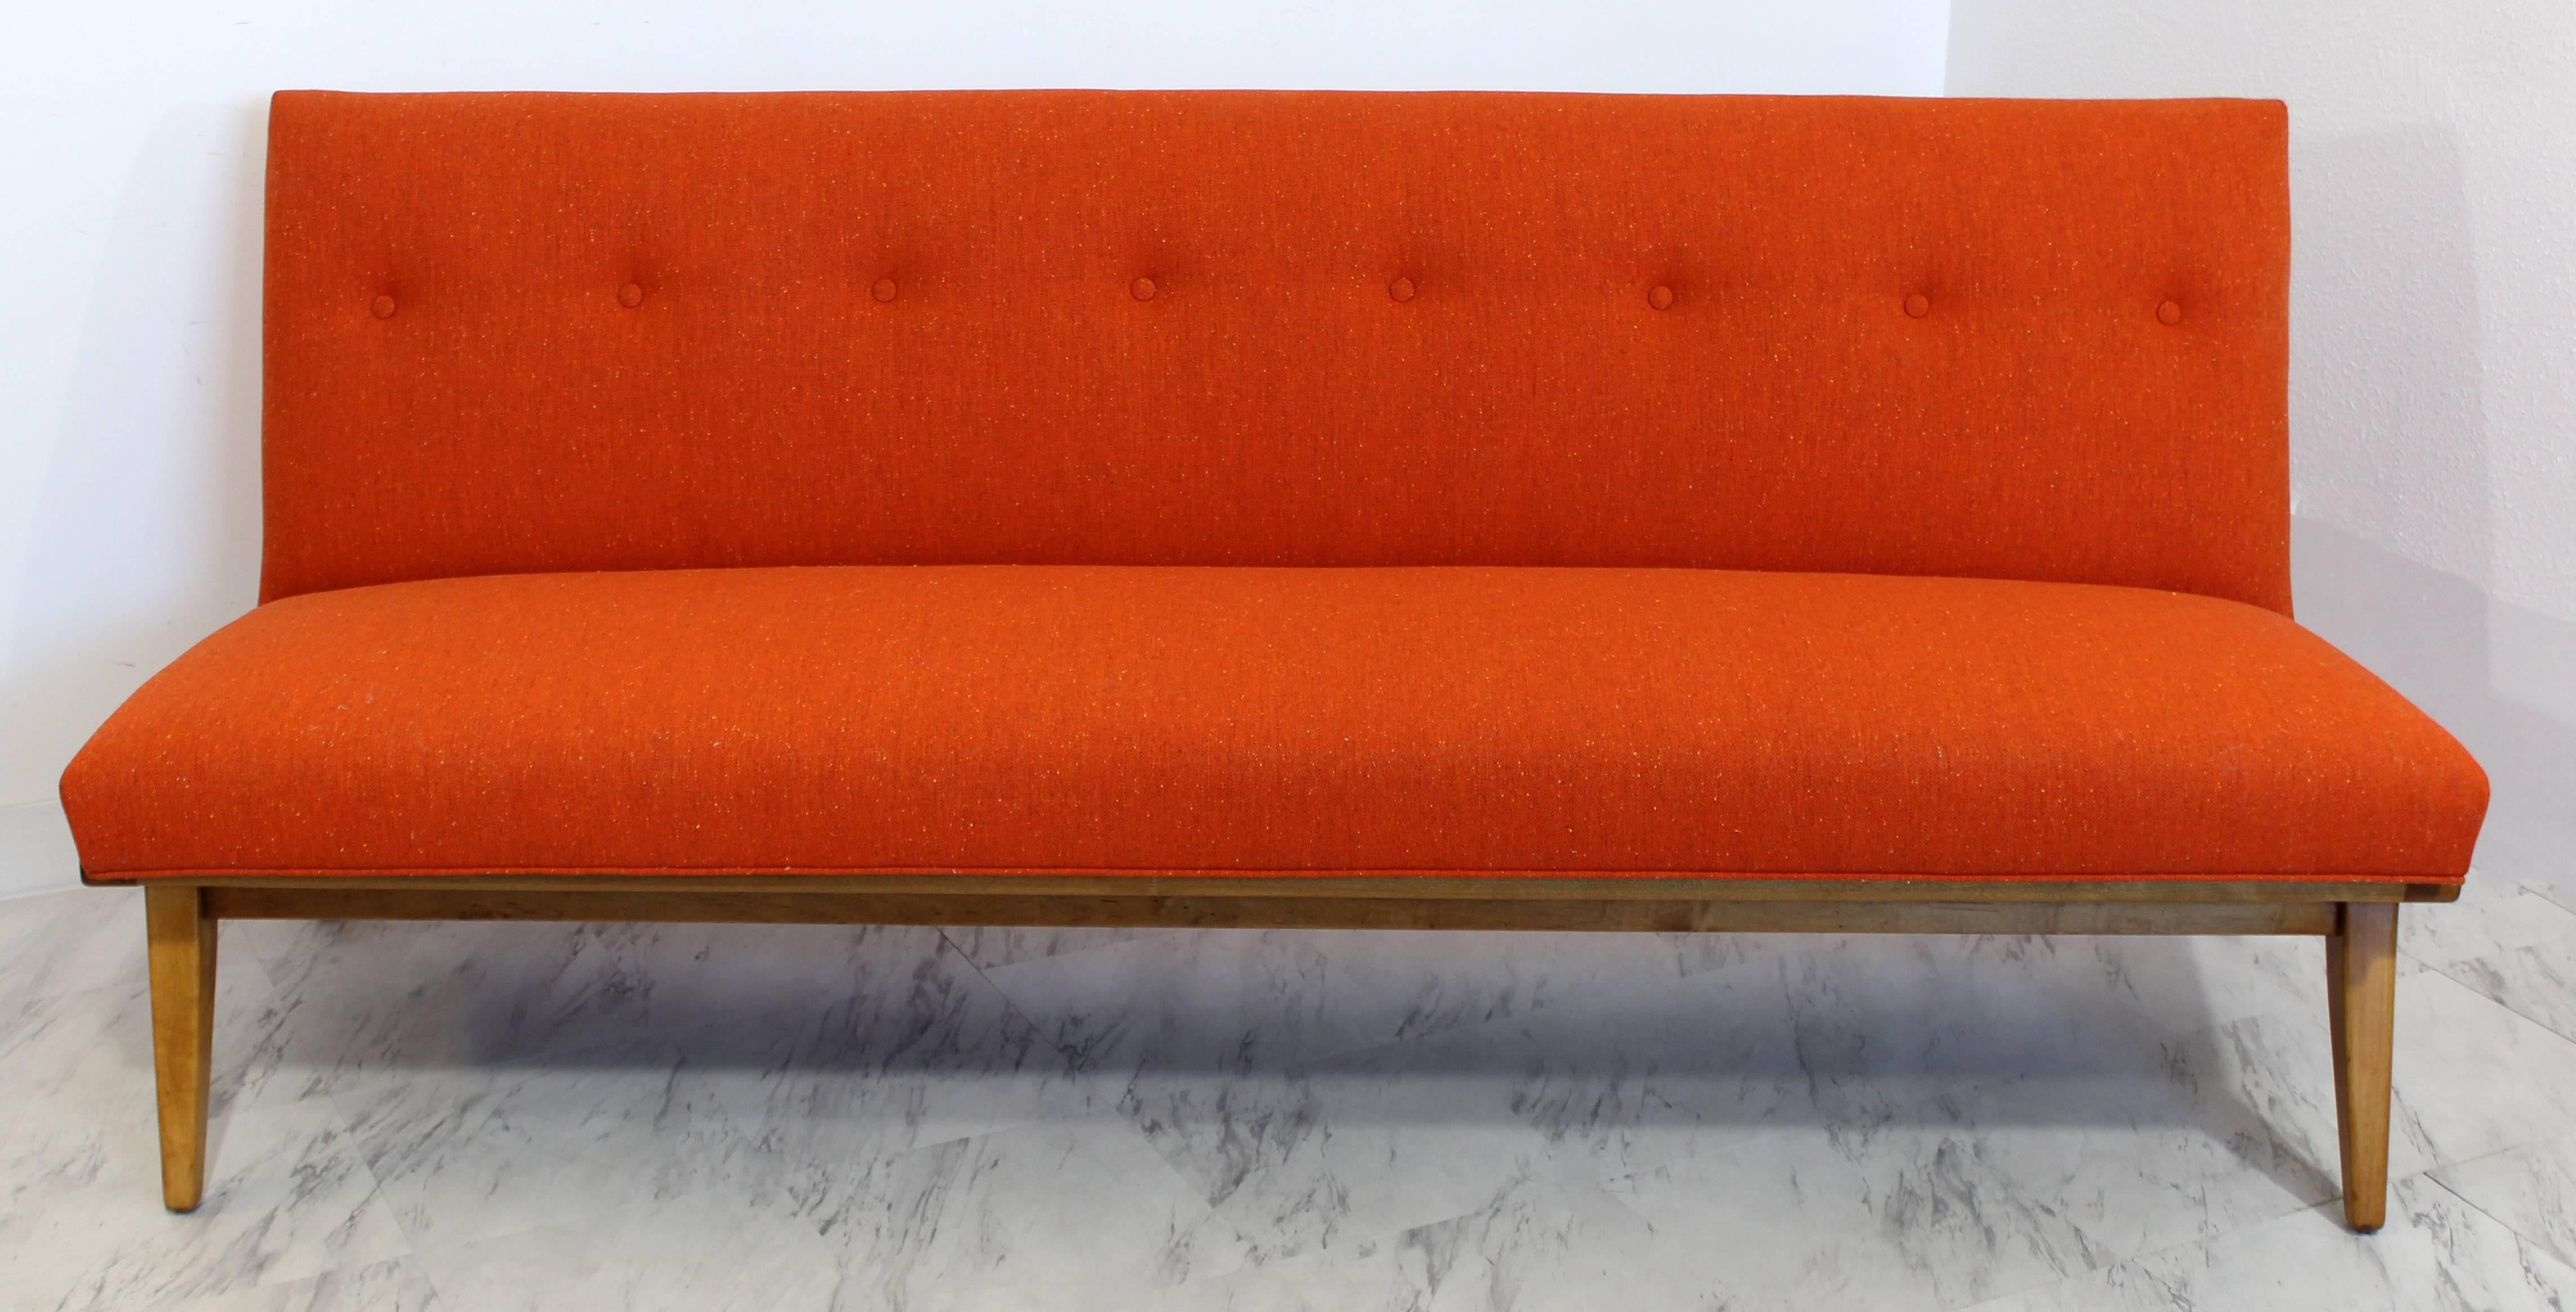 American Mid-Century Modern Rare Jens Risom for Knoll Tufted Orange Fabric Sofa, 1950s